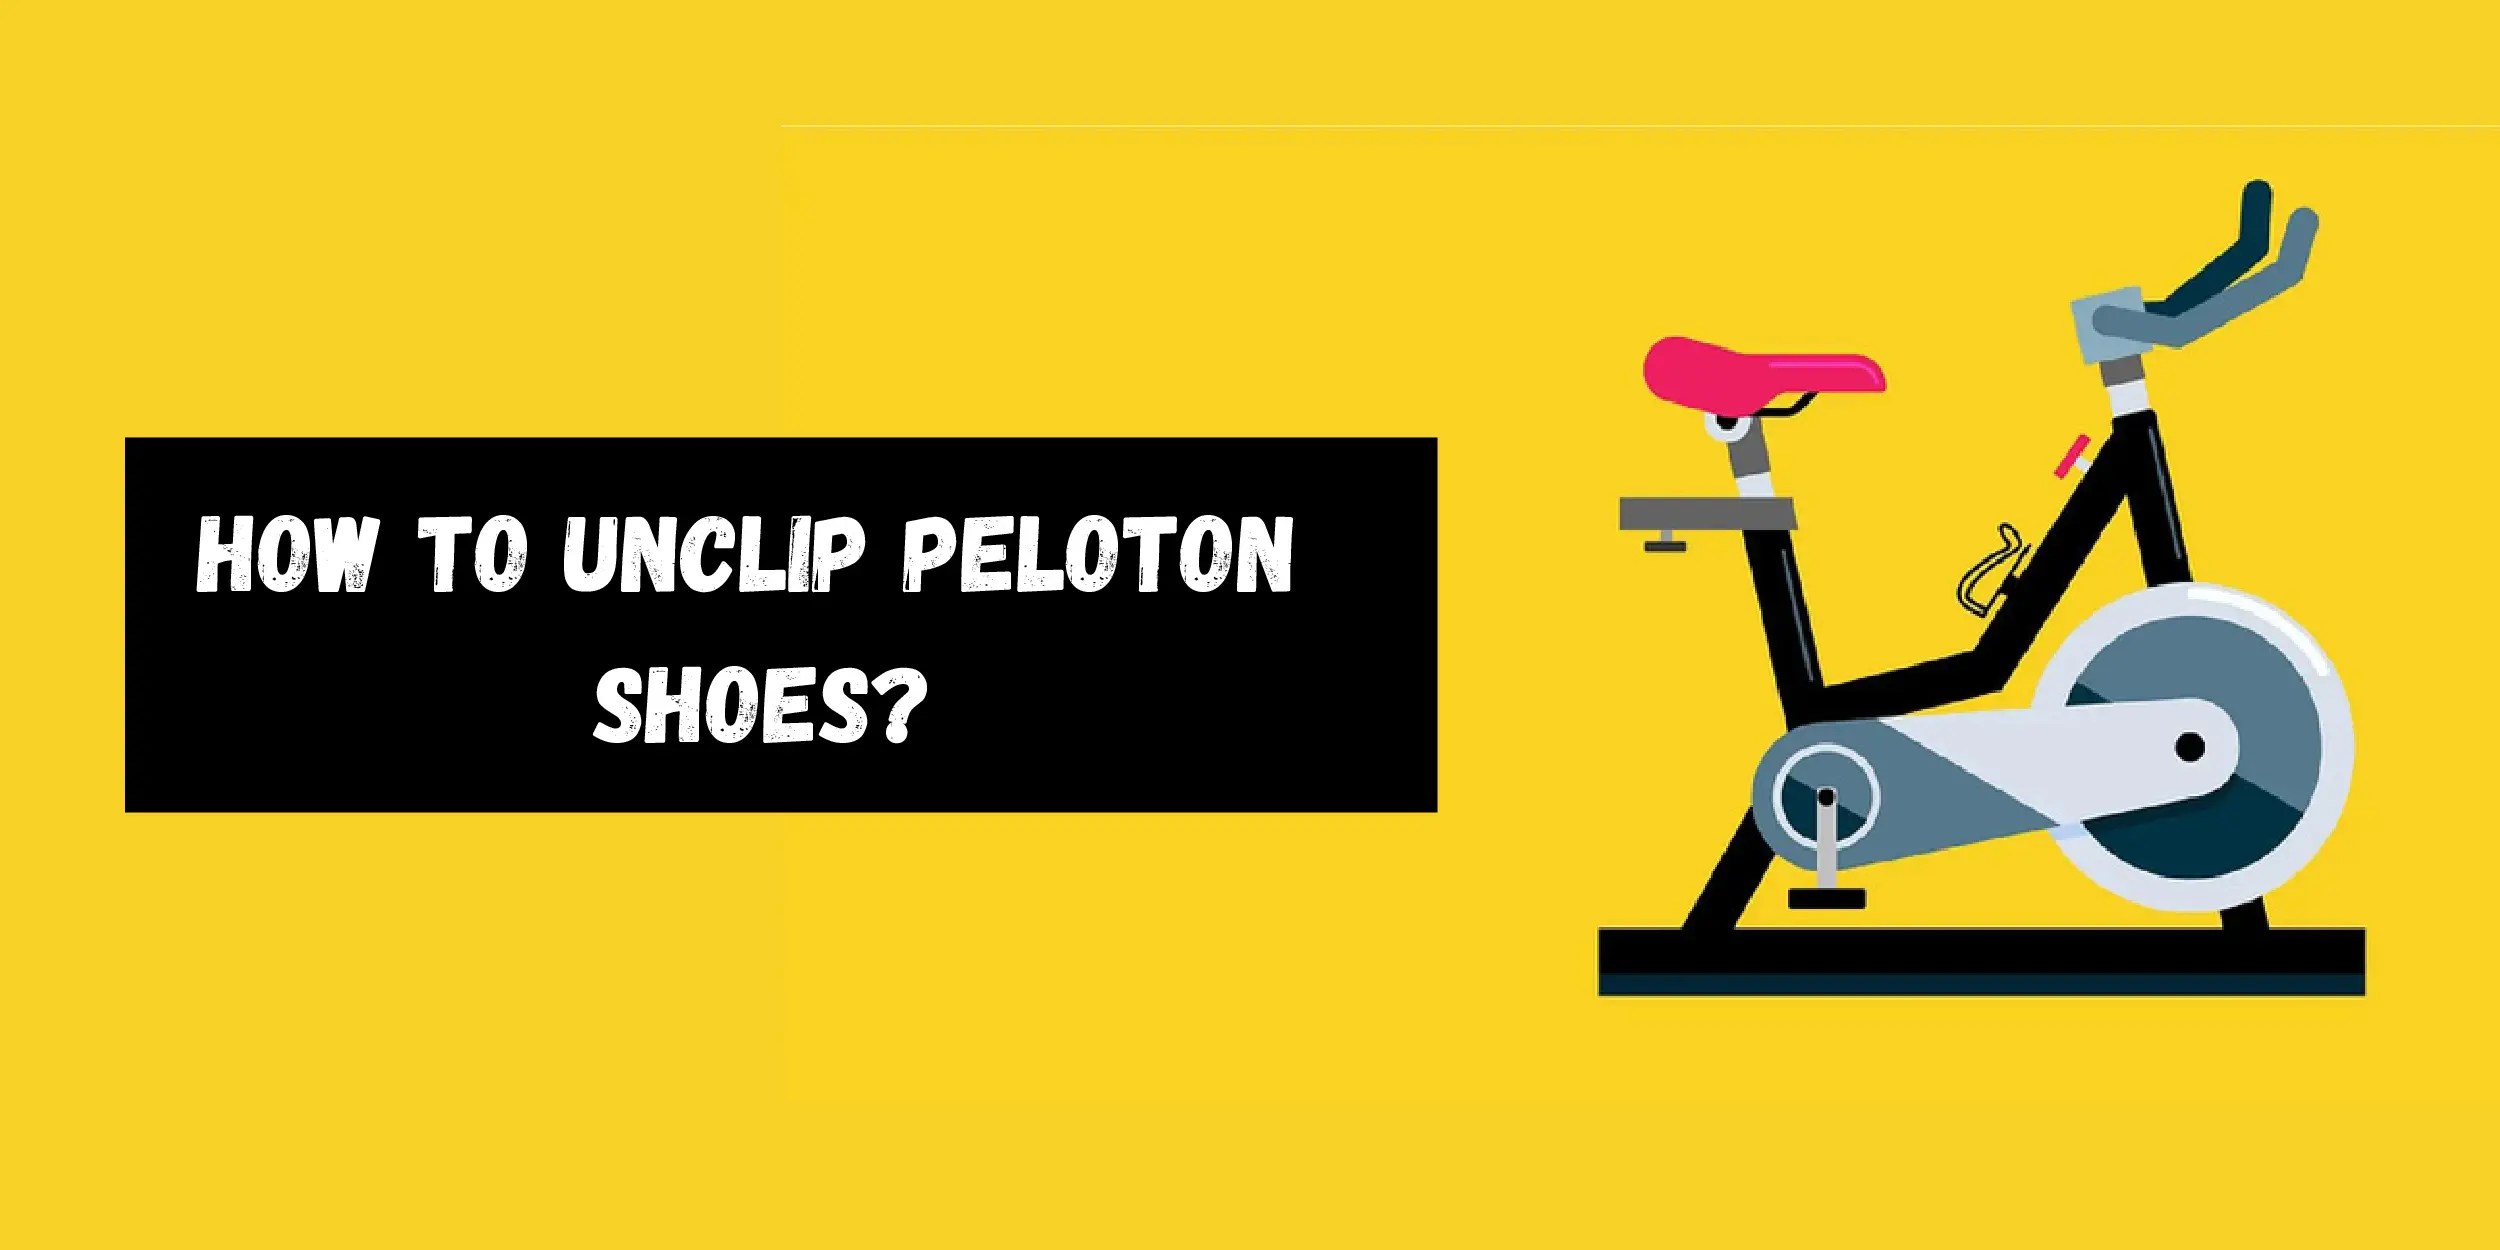 How to Unclip Peloton Shoes?